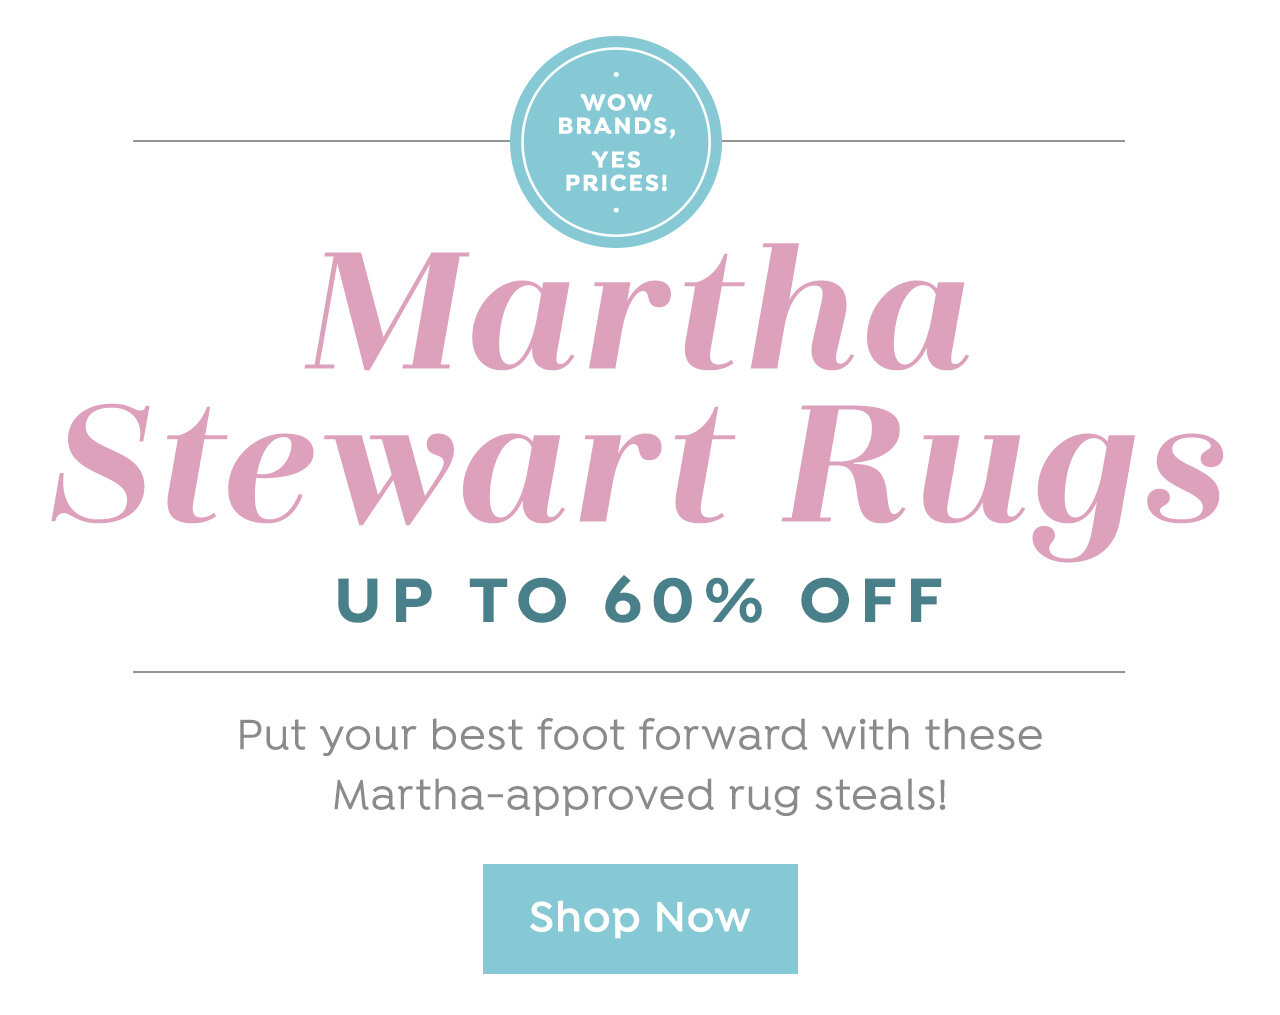 Martha Stewart Rugs